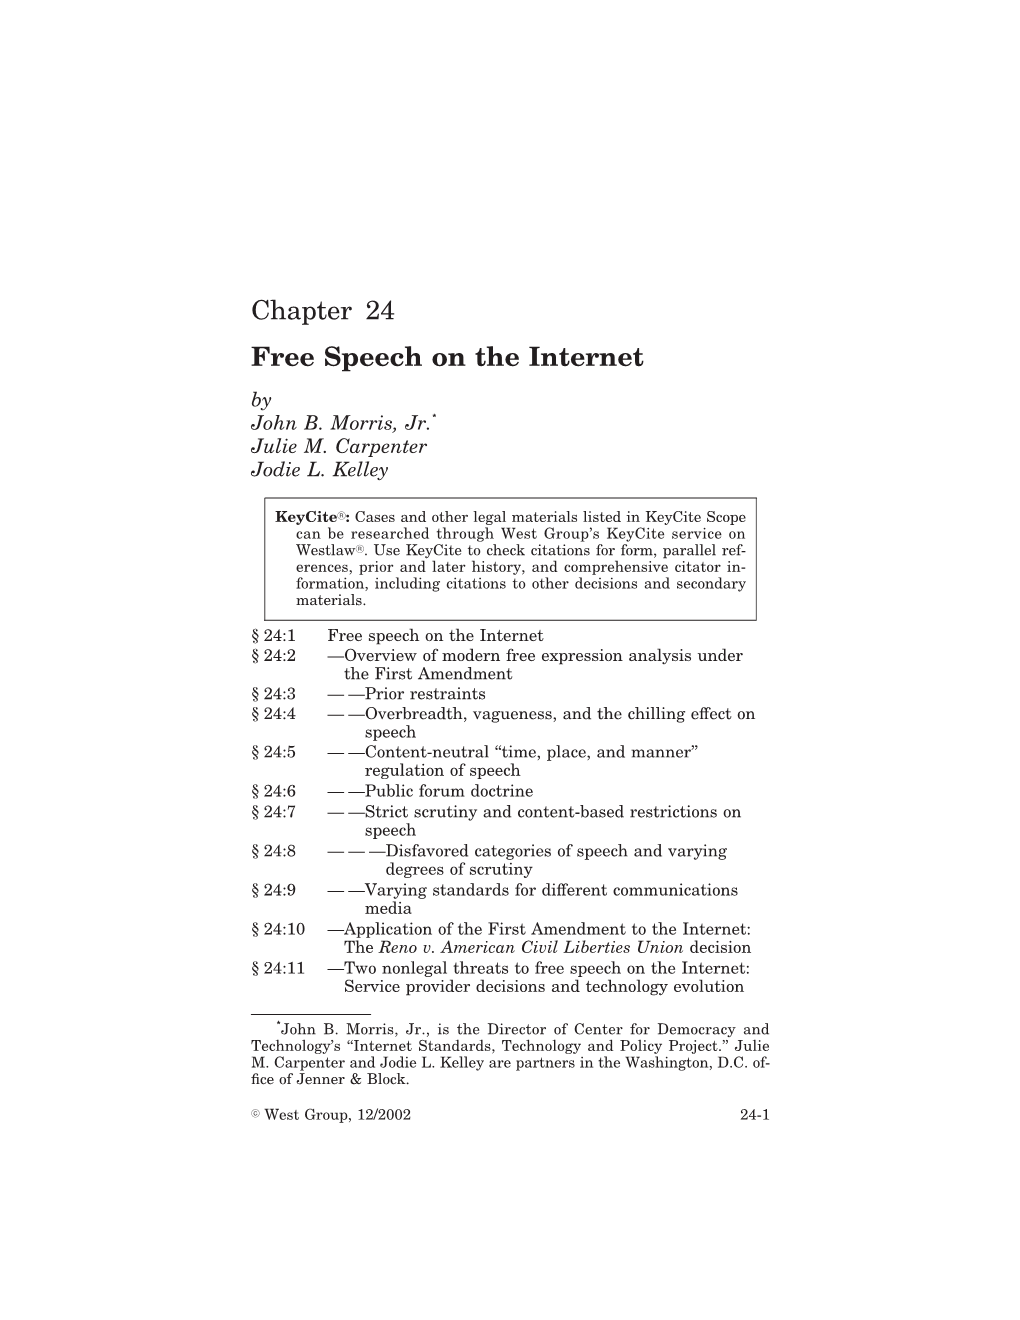 Free Speech on the Internet by John B